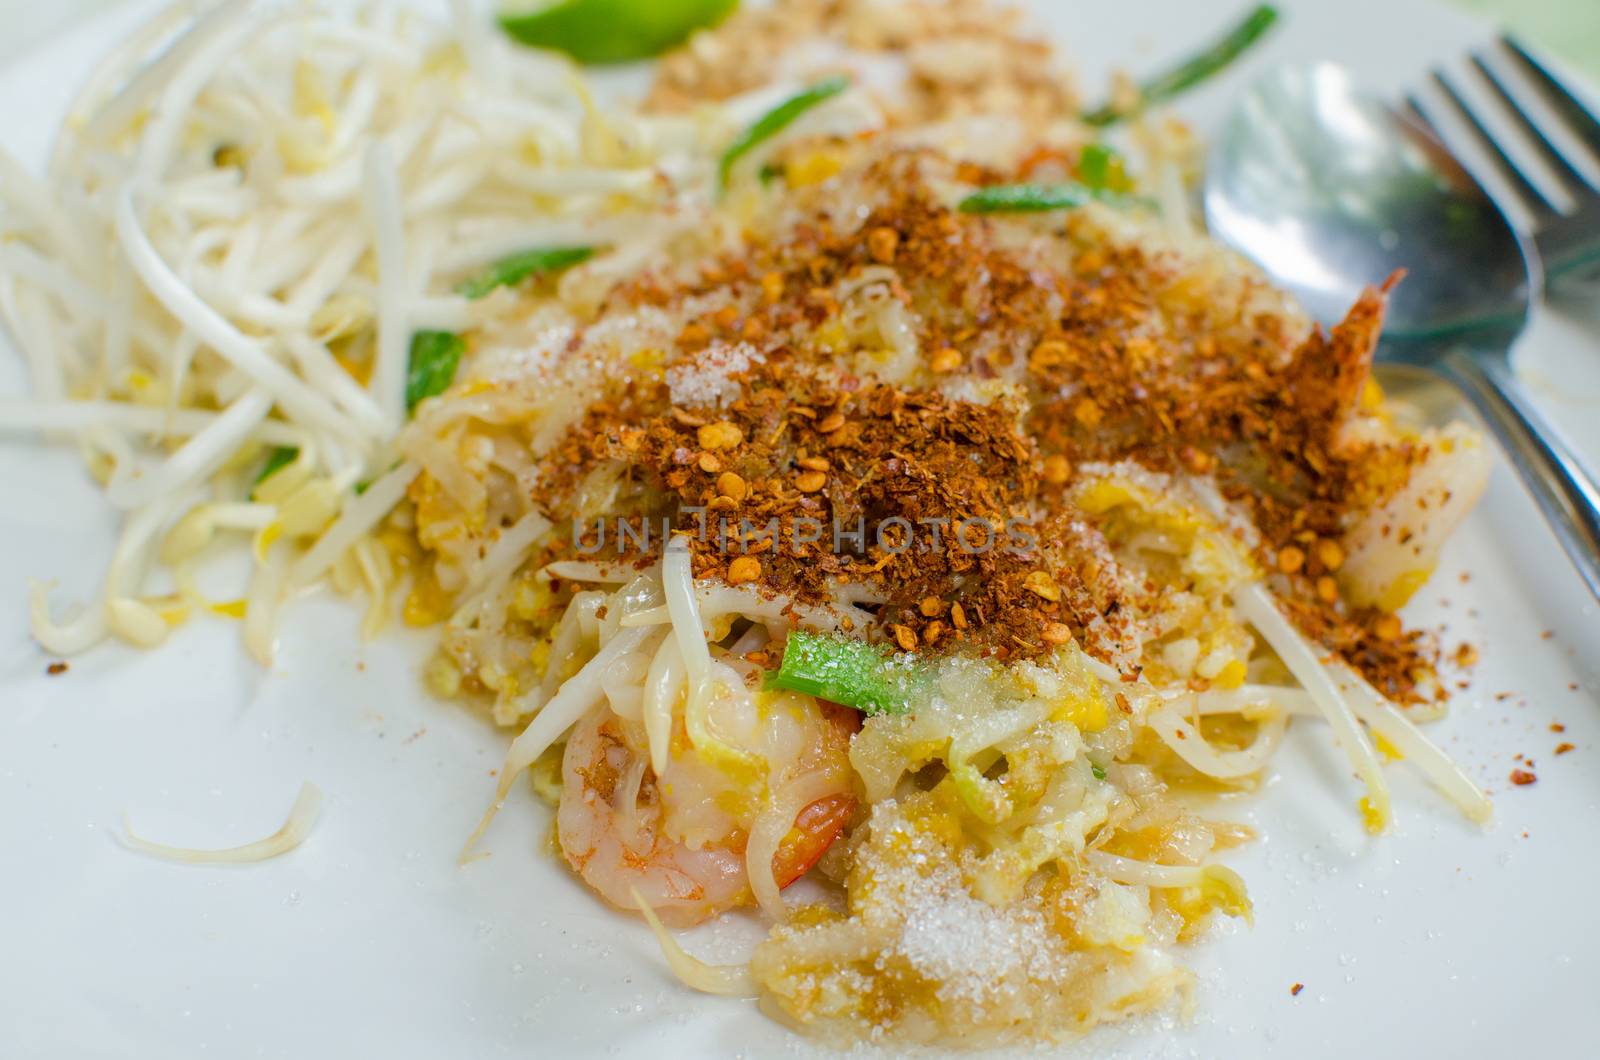 Pat Thai,Popular food,spicy ,thailand food